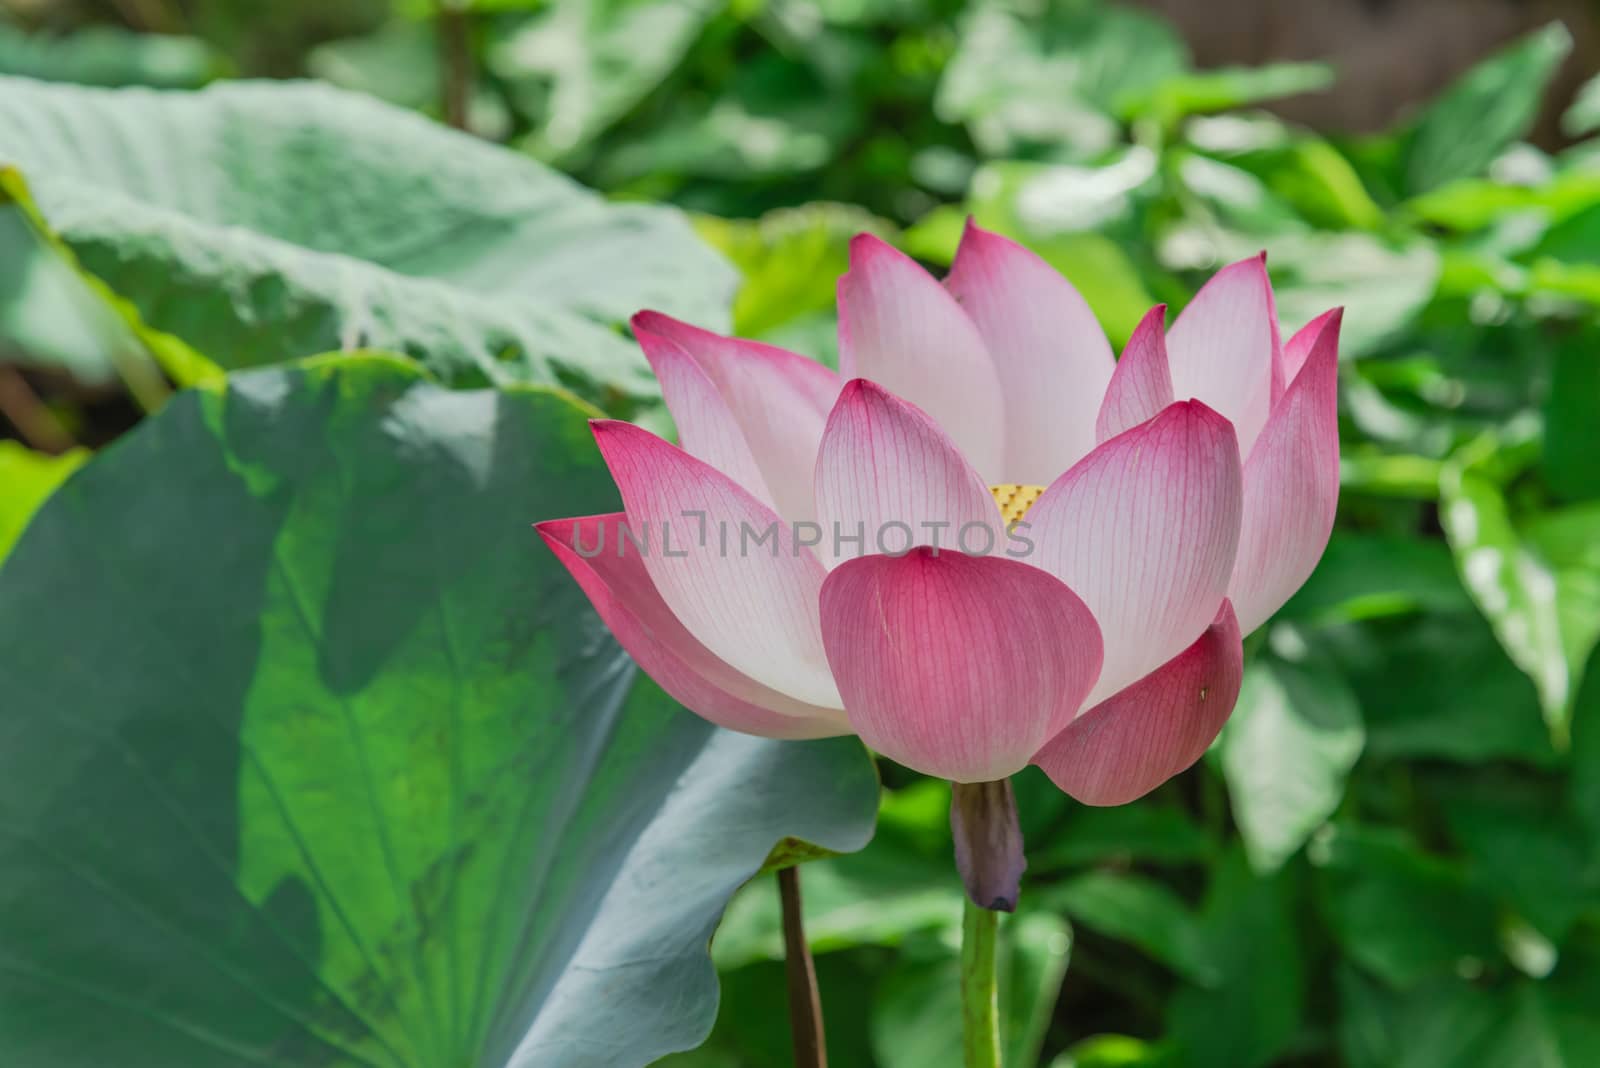 Beautiful blooming pink lotus flower with golden stamen (or Nelumbo nucifera gaertn, Nelumbonaceae, sacred lotus) cultivated in water garden. Lotus is national flower of India and Vietnam